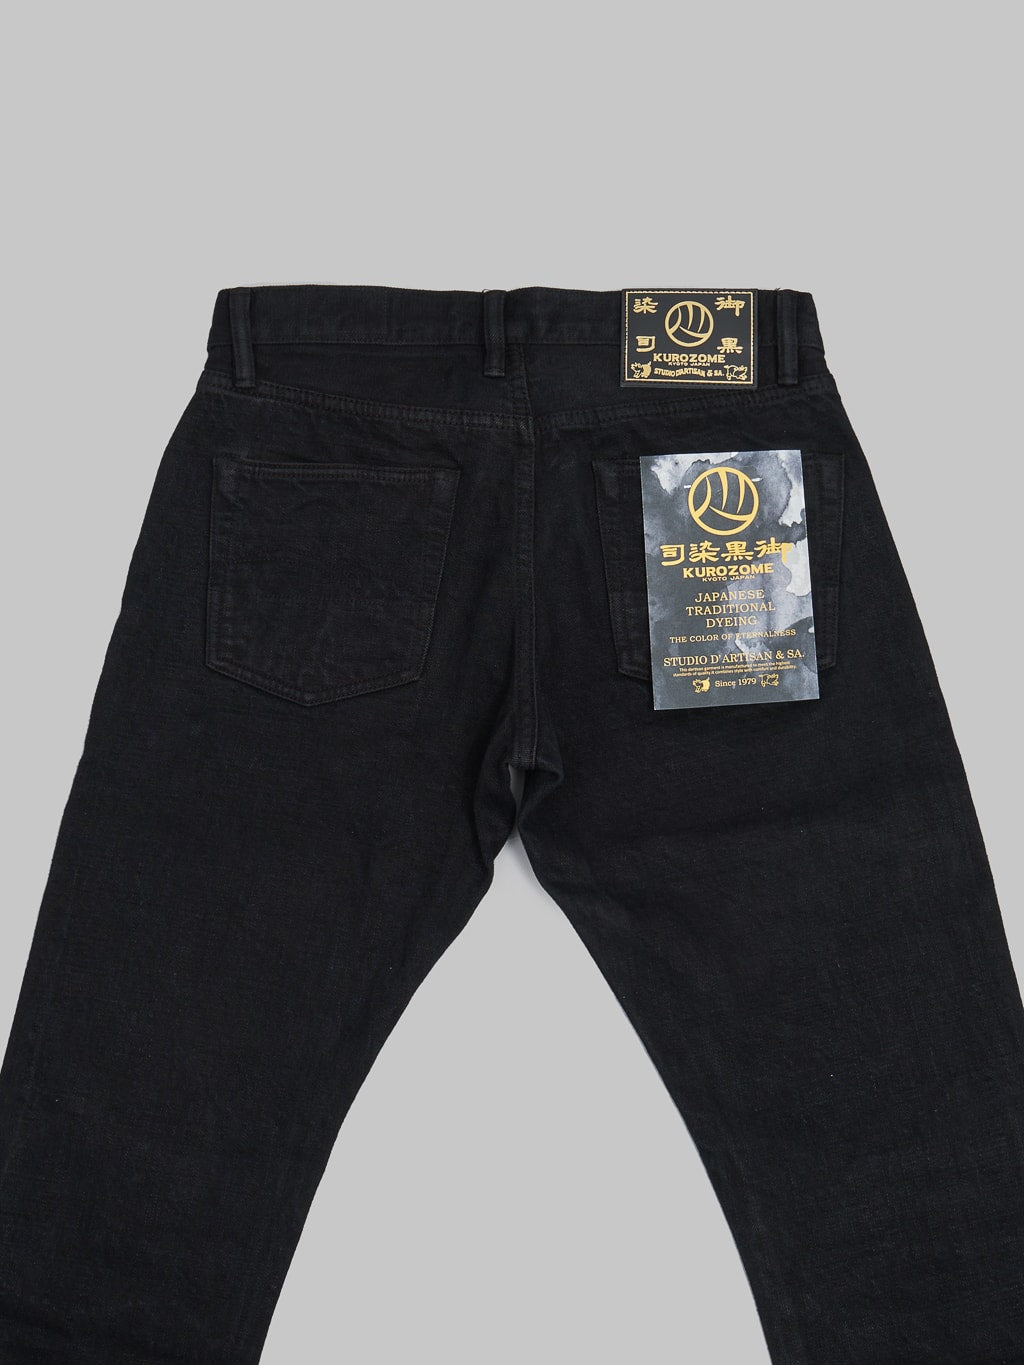 Studio DArtisan Kurozome Black 14oz Selvedge Jeans Relaxed Tapered back pockets